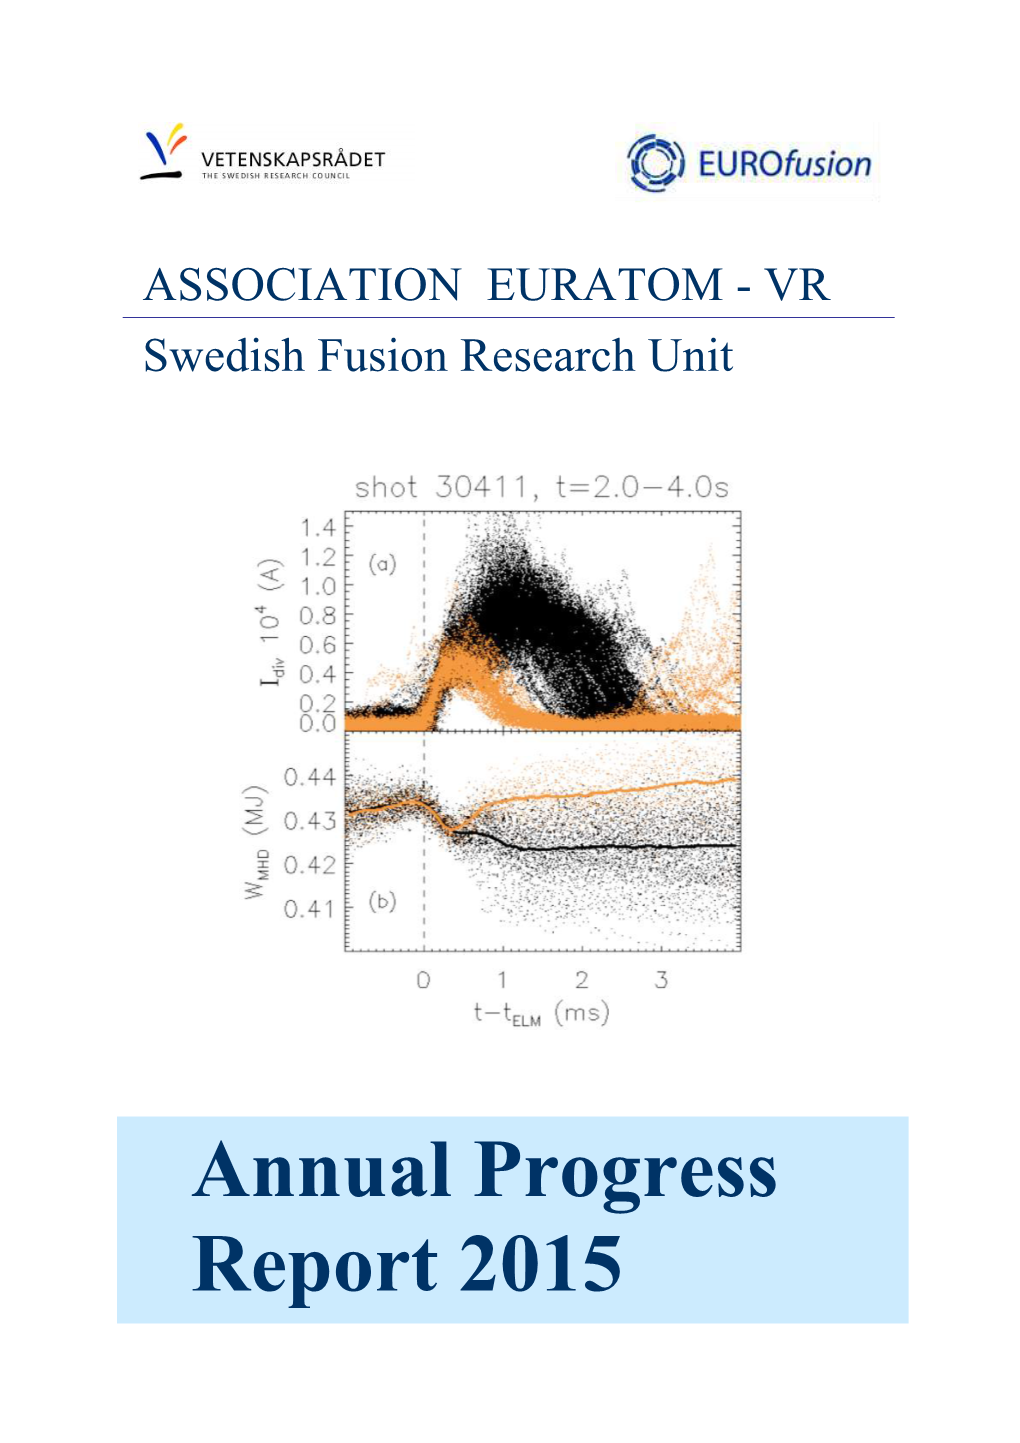 Progress Report 2015 of the Fusion Association EURATOM-VR